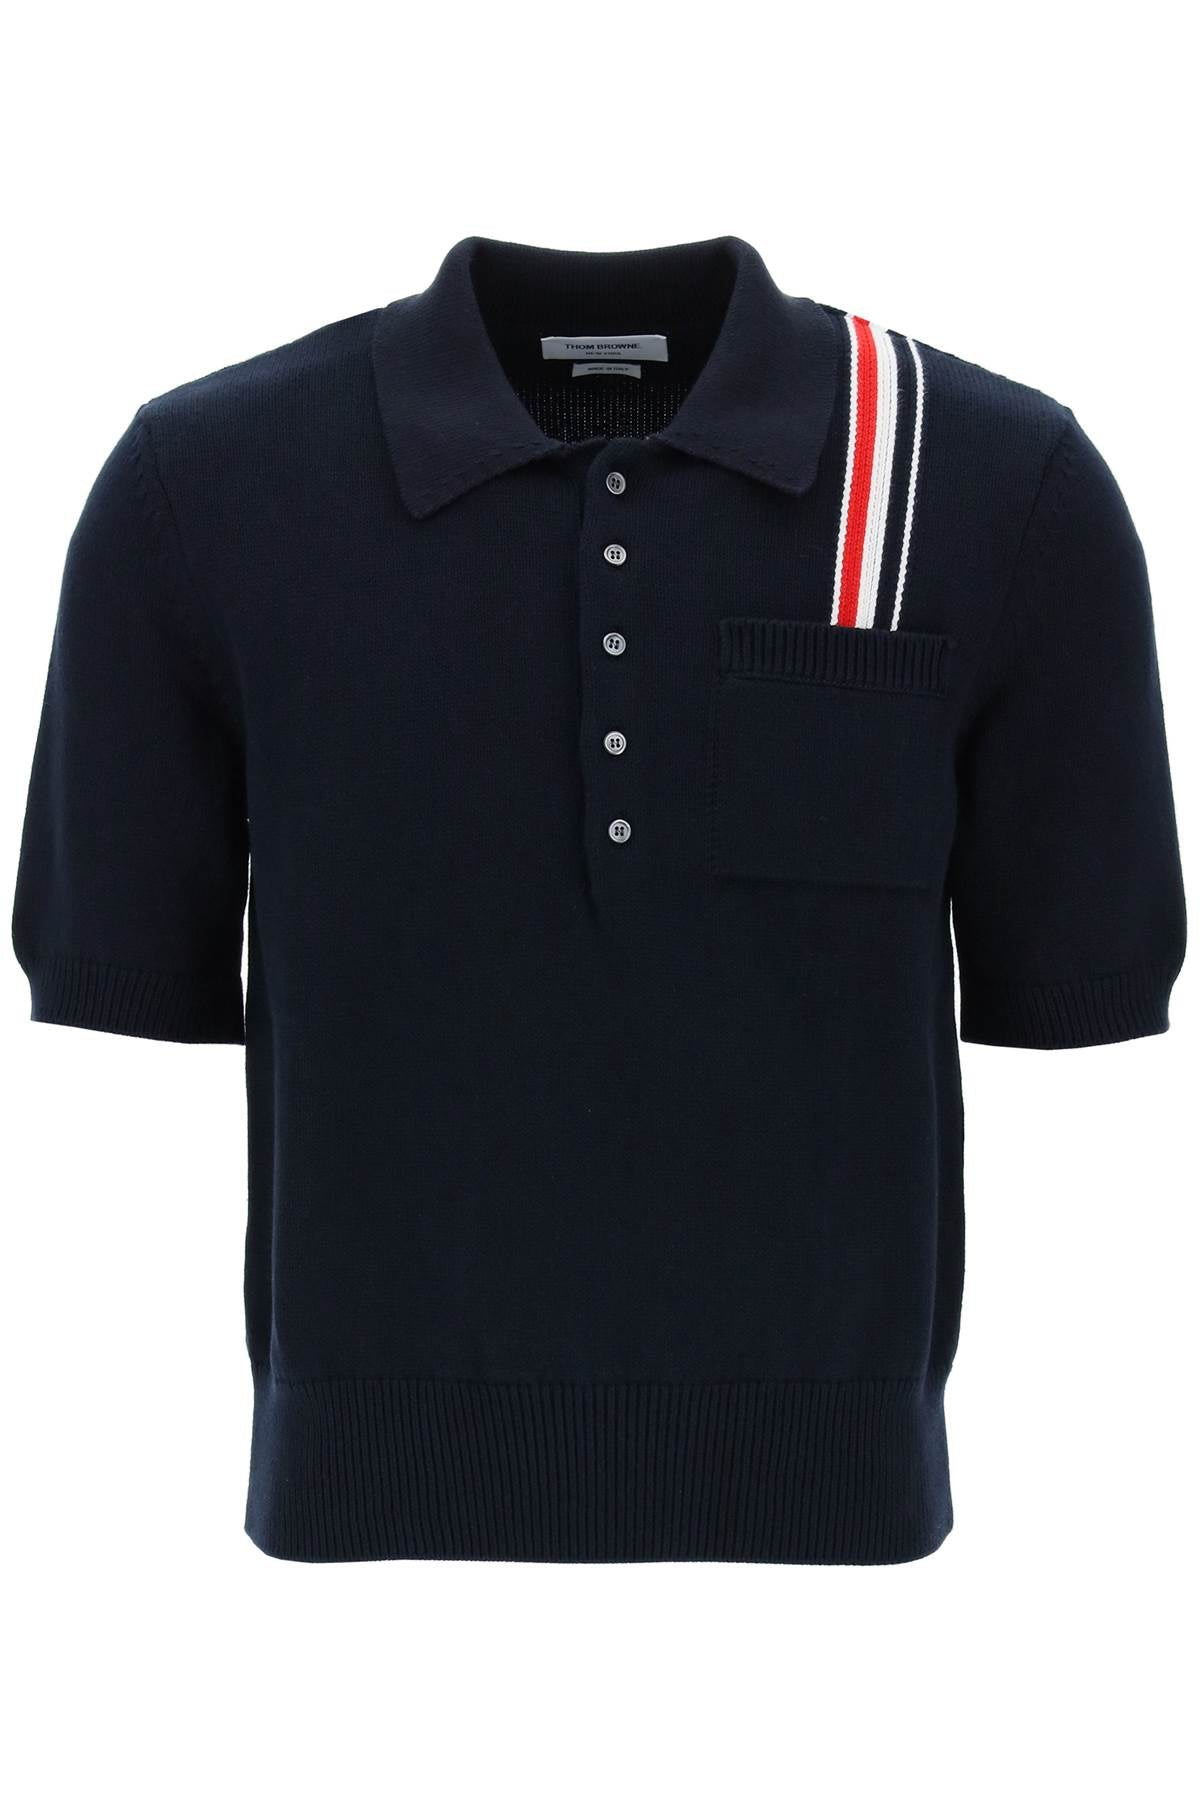 Thom browne cotton knit polo shirt with rwb stripe-0